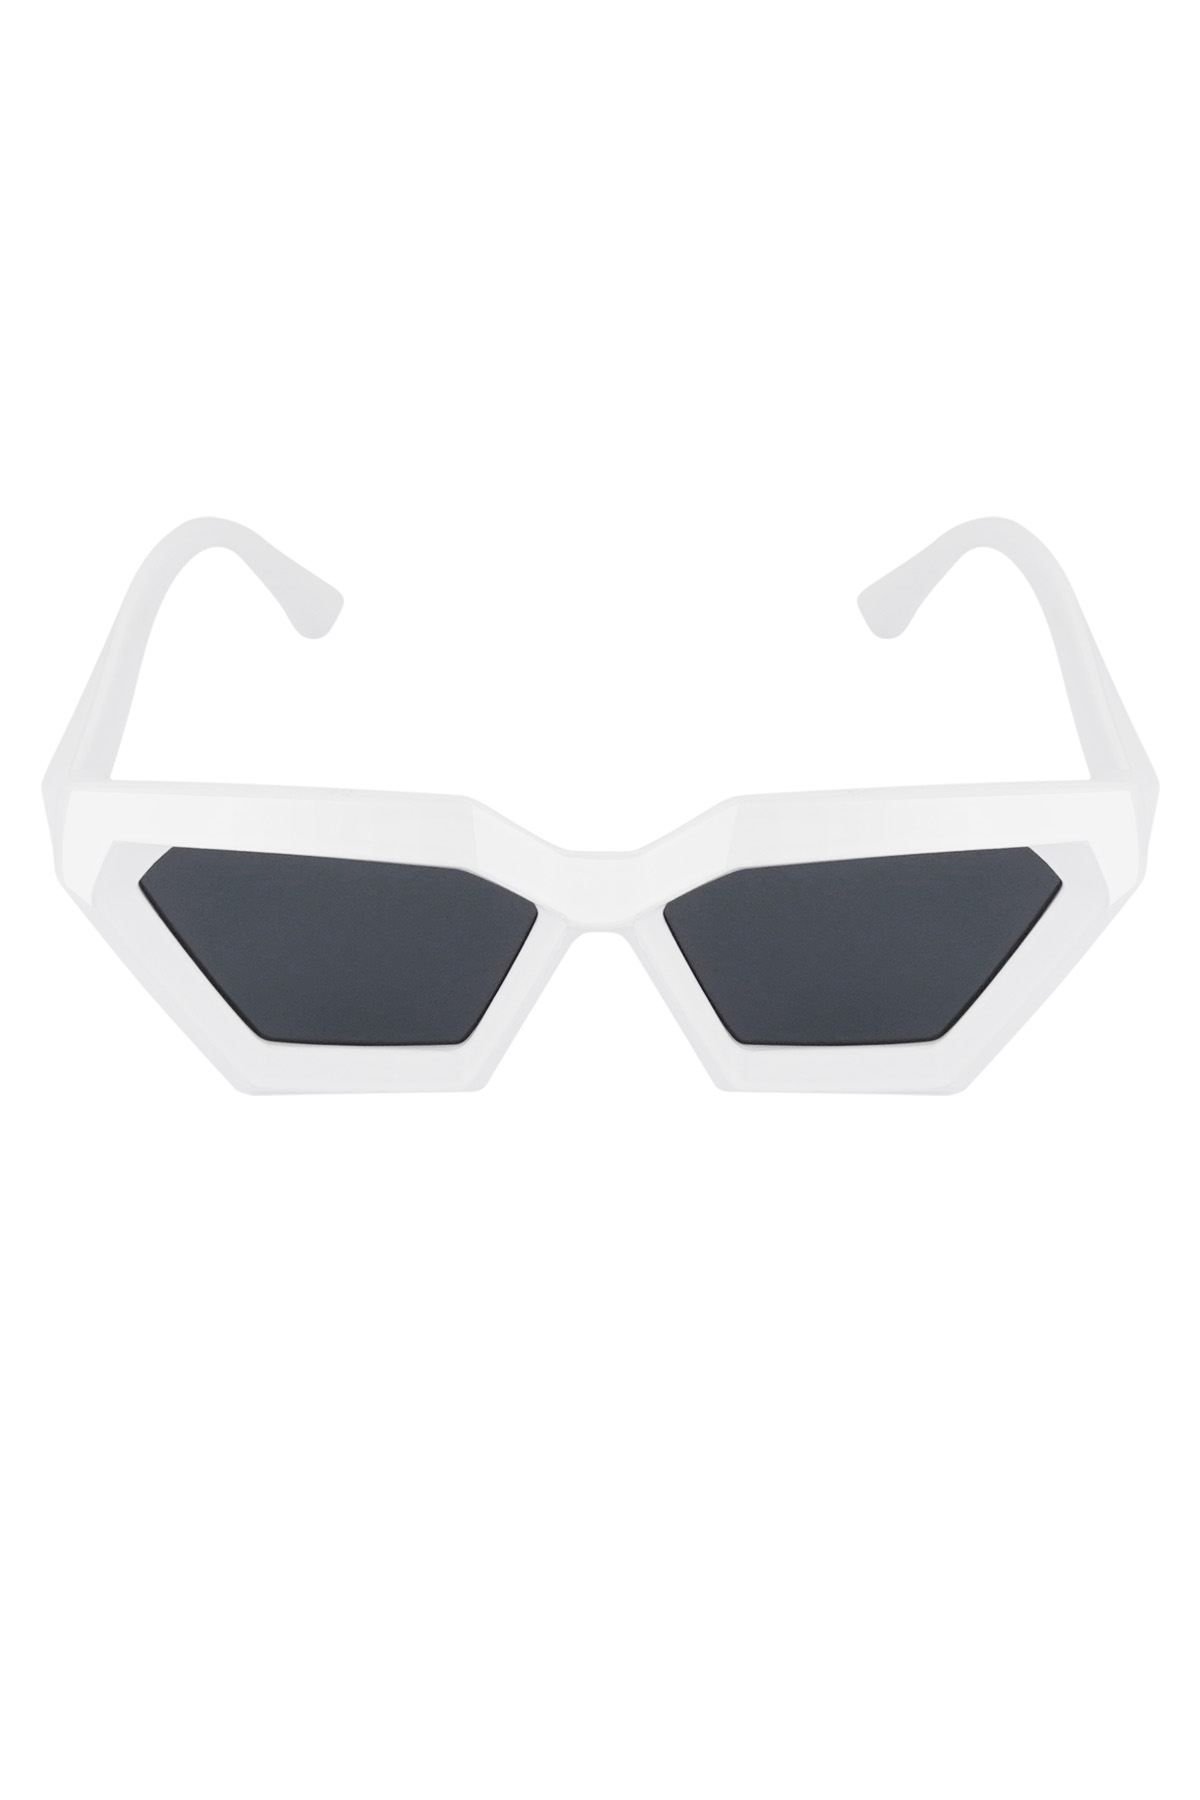 Angular sunglasses - white Picture5